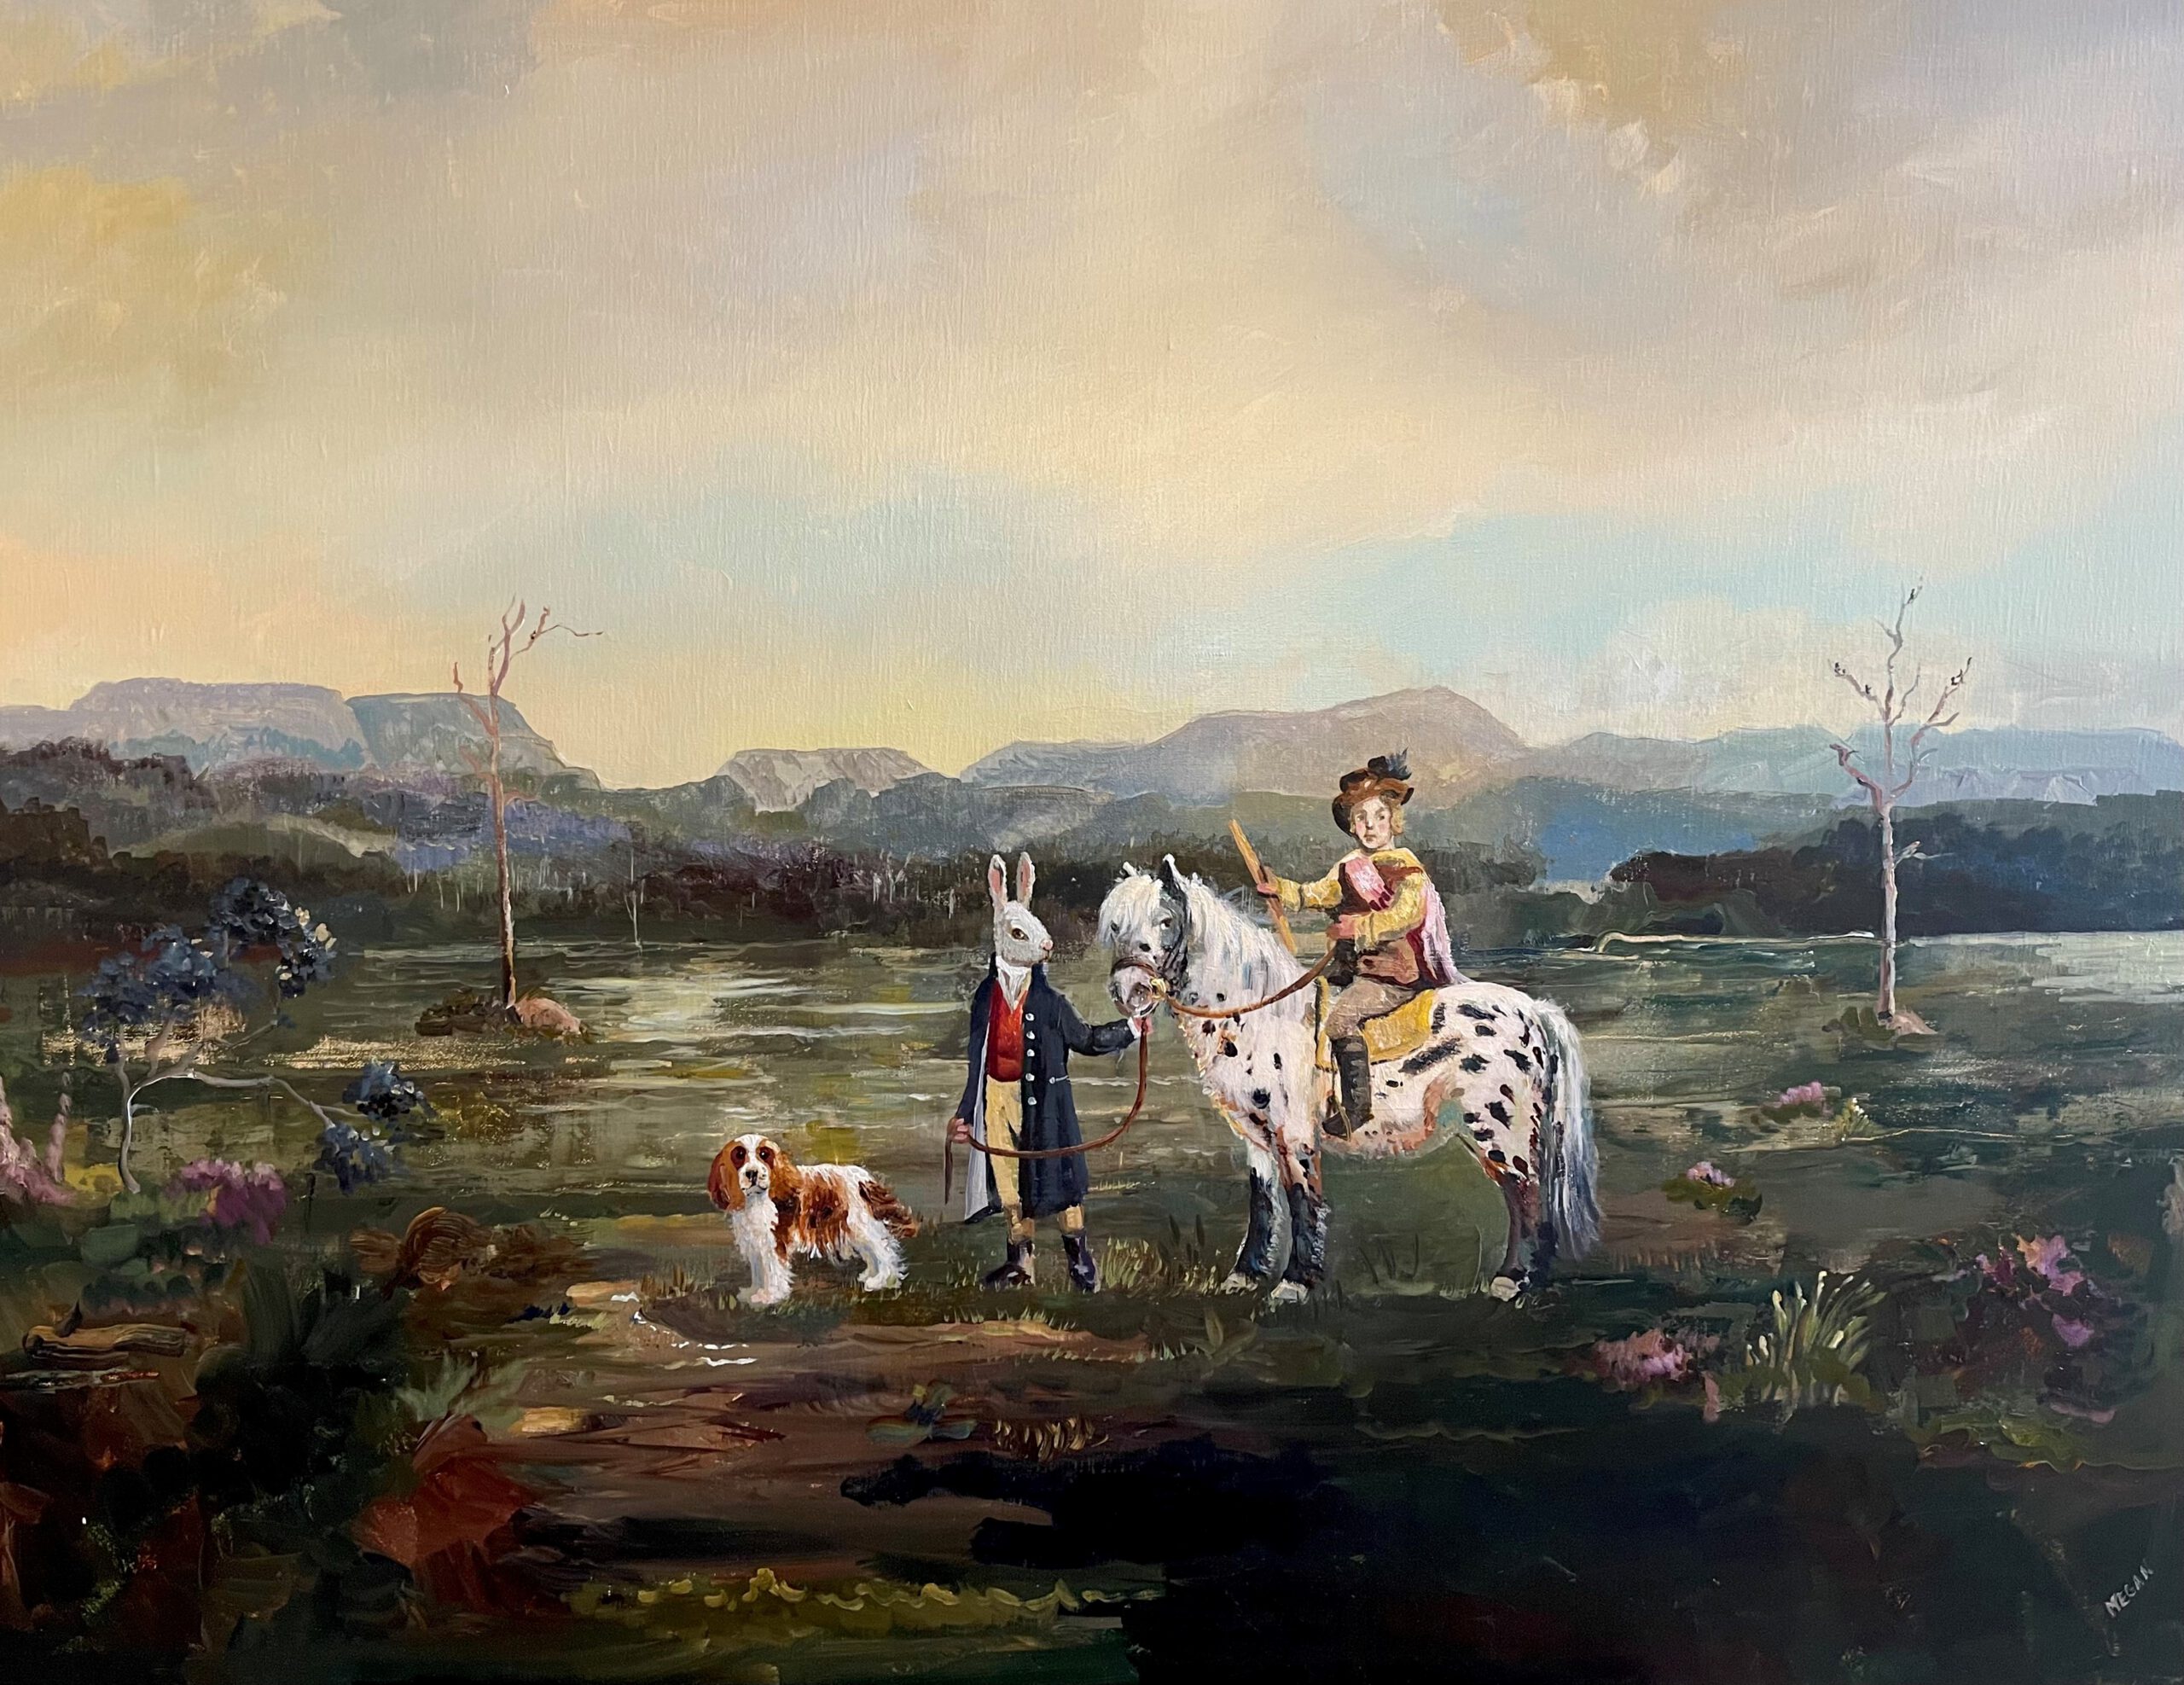 Melissa Egan 'Autumn Stroll at the Great Lakes' oil on canvas 92 x 125cm